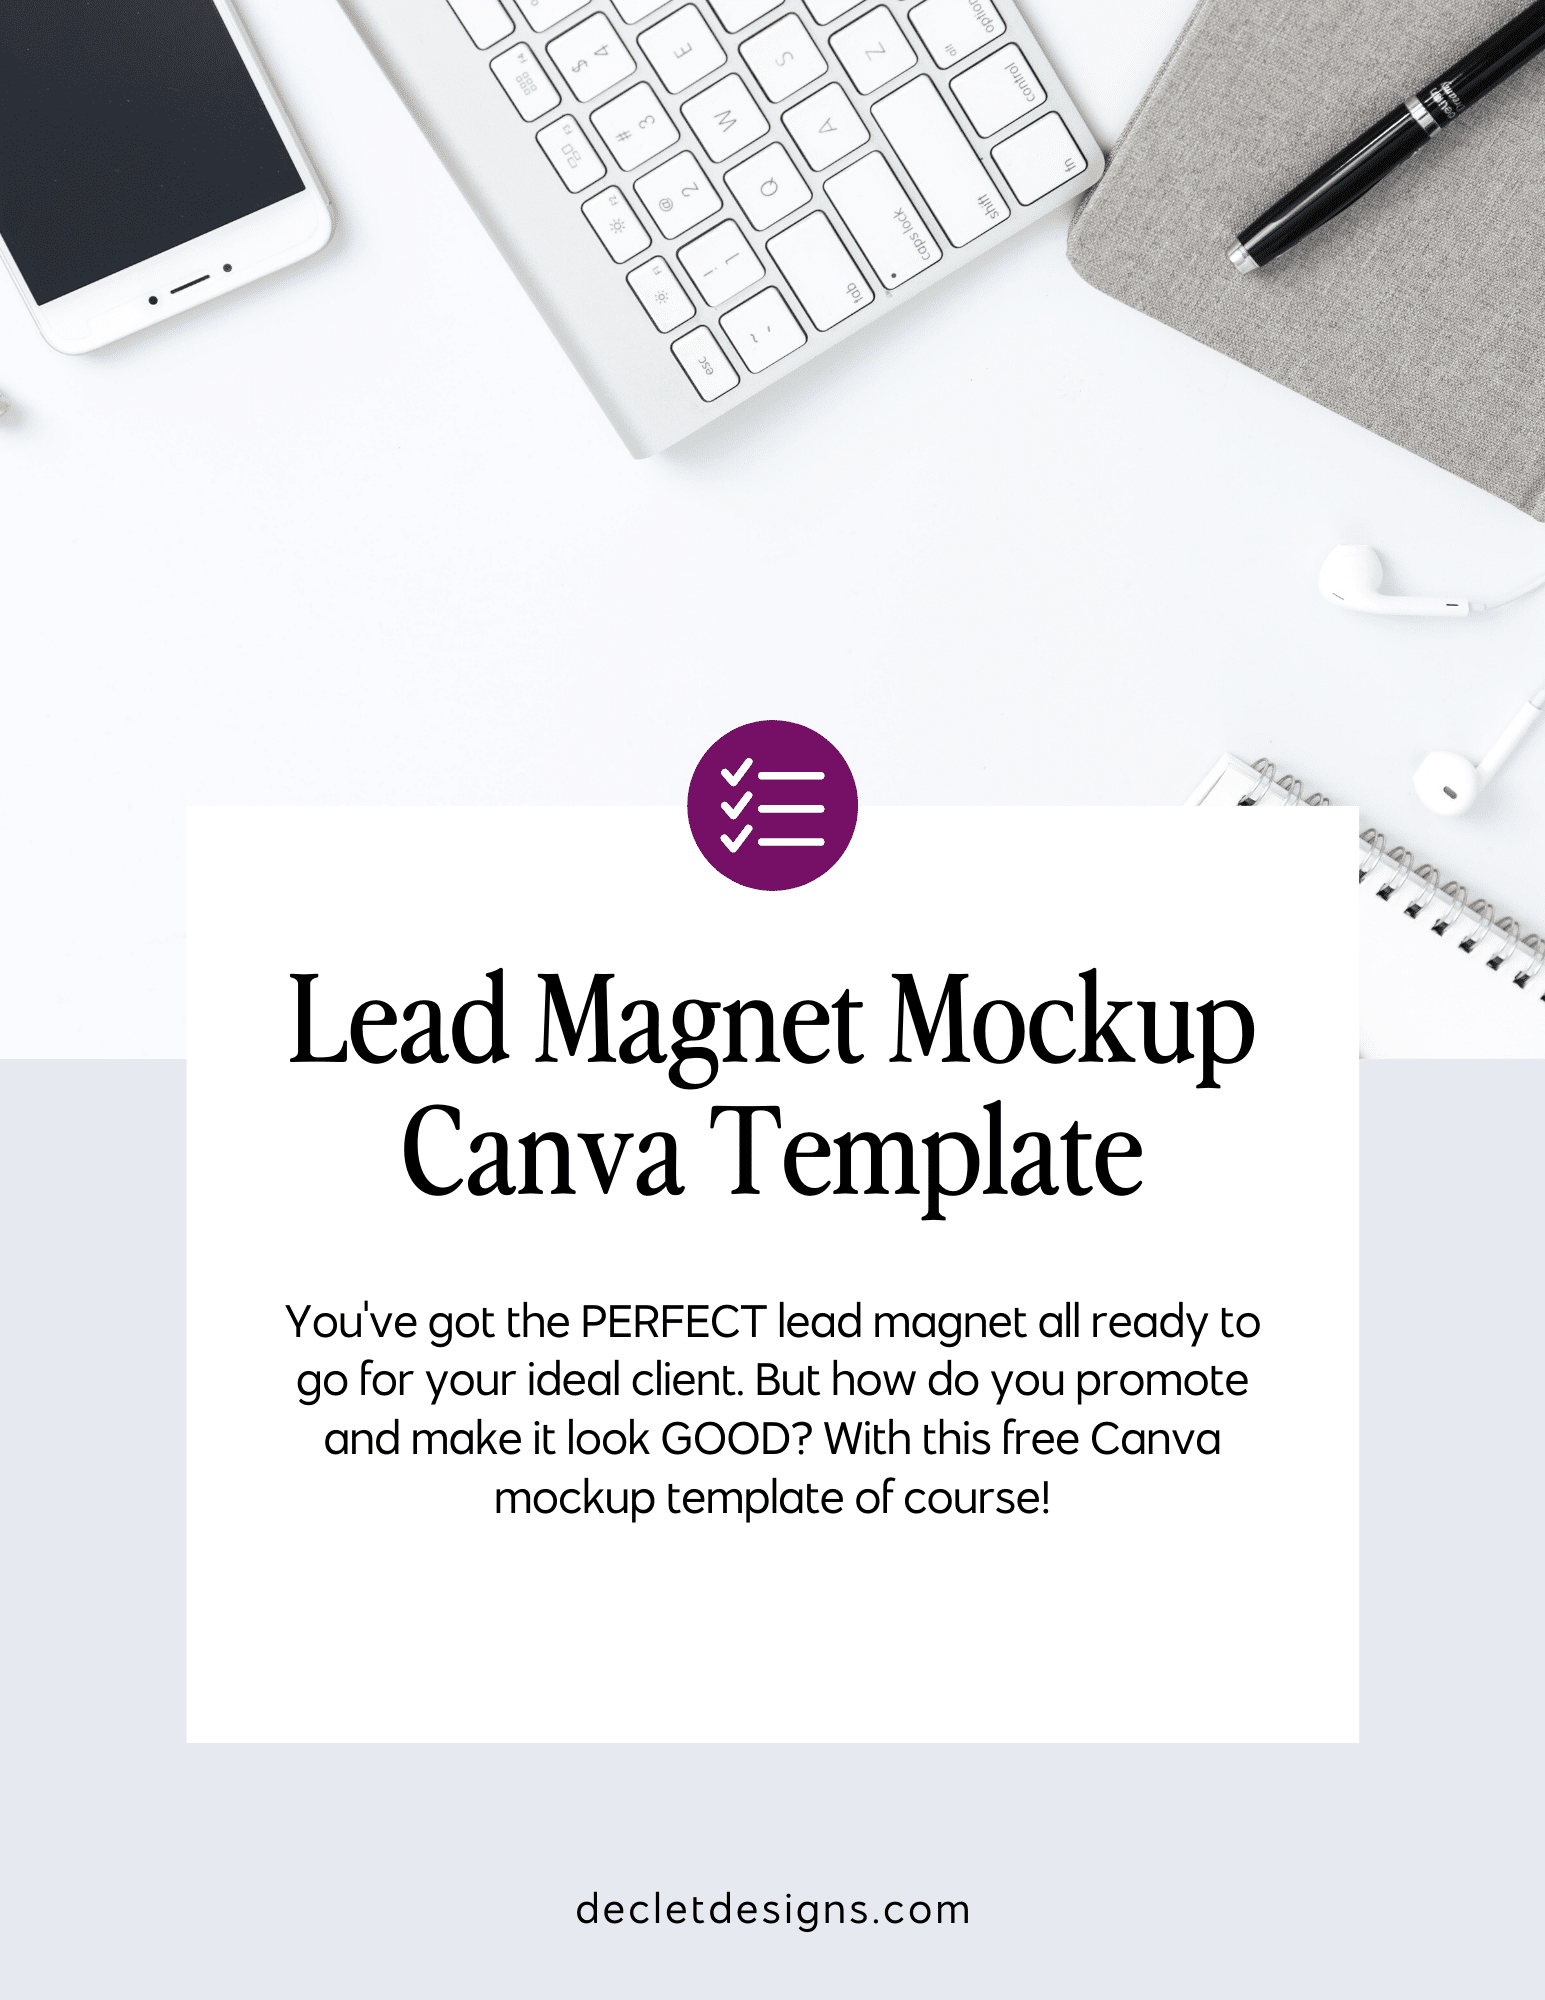 Lead magnet mockup canva template